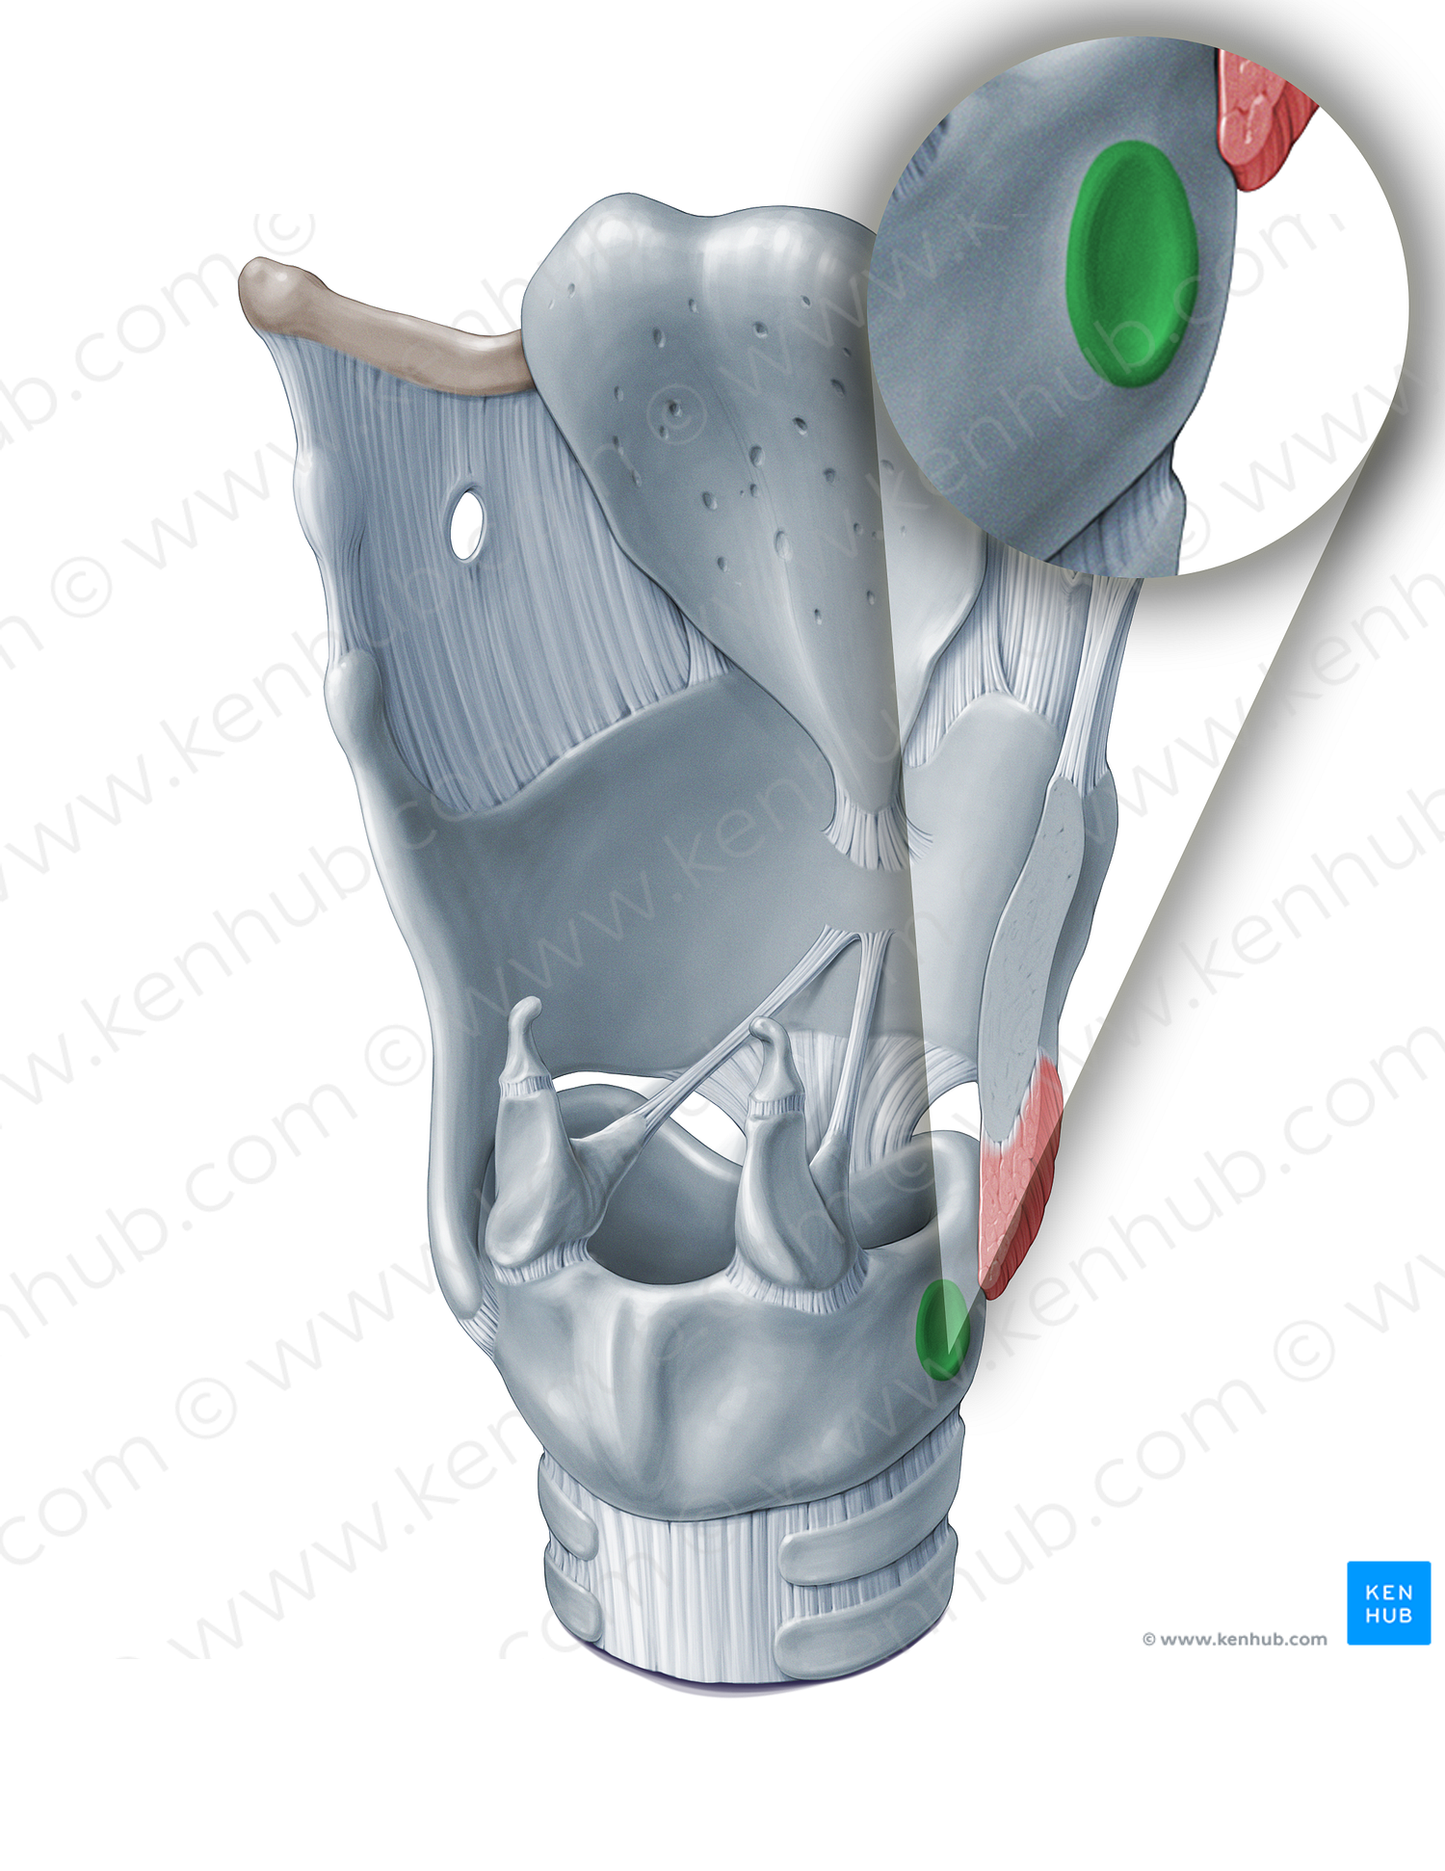 Thyroid articular surface of cricoid cartilage (#18363)